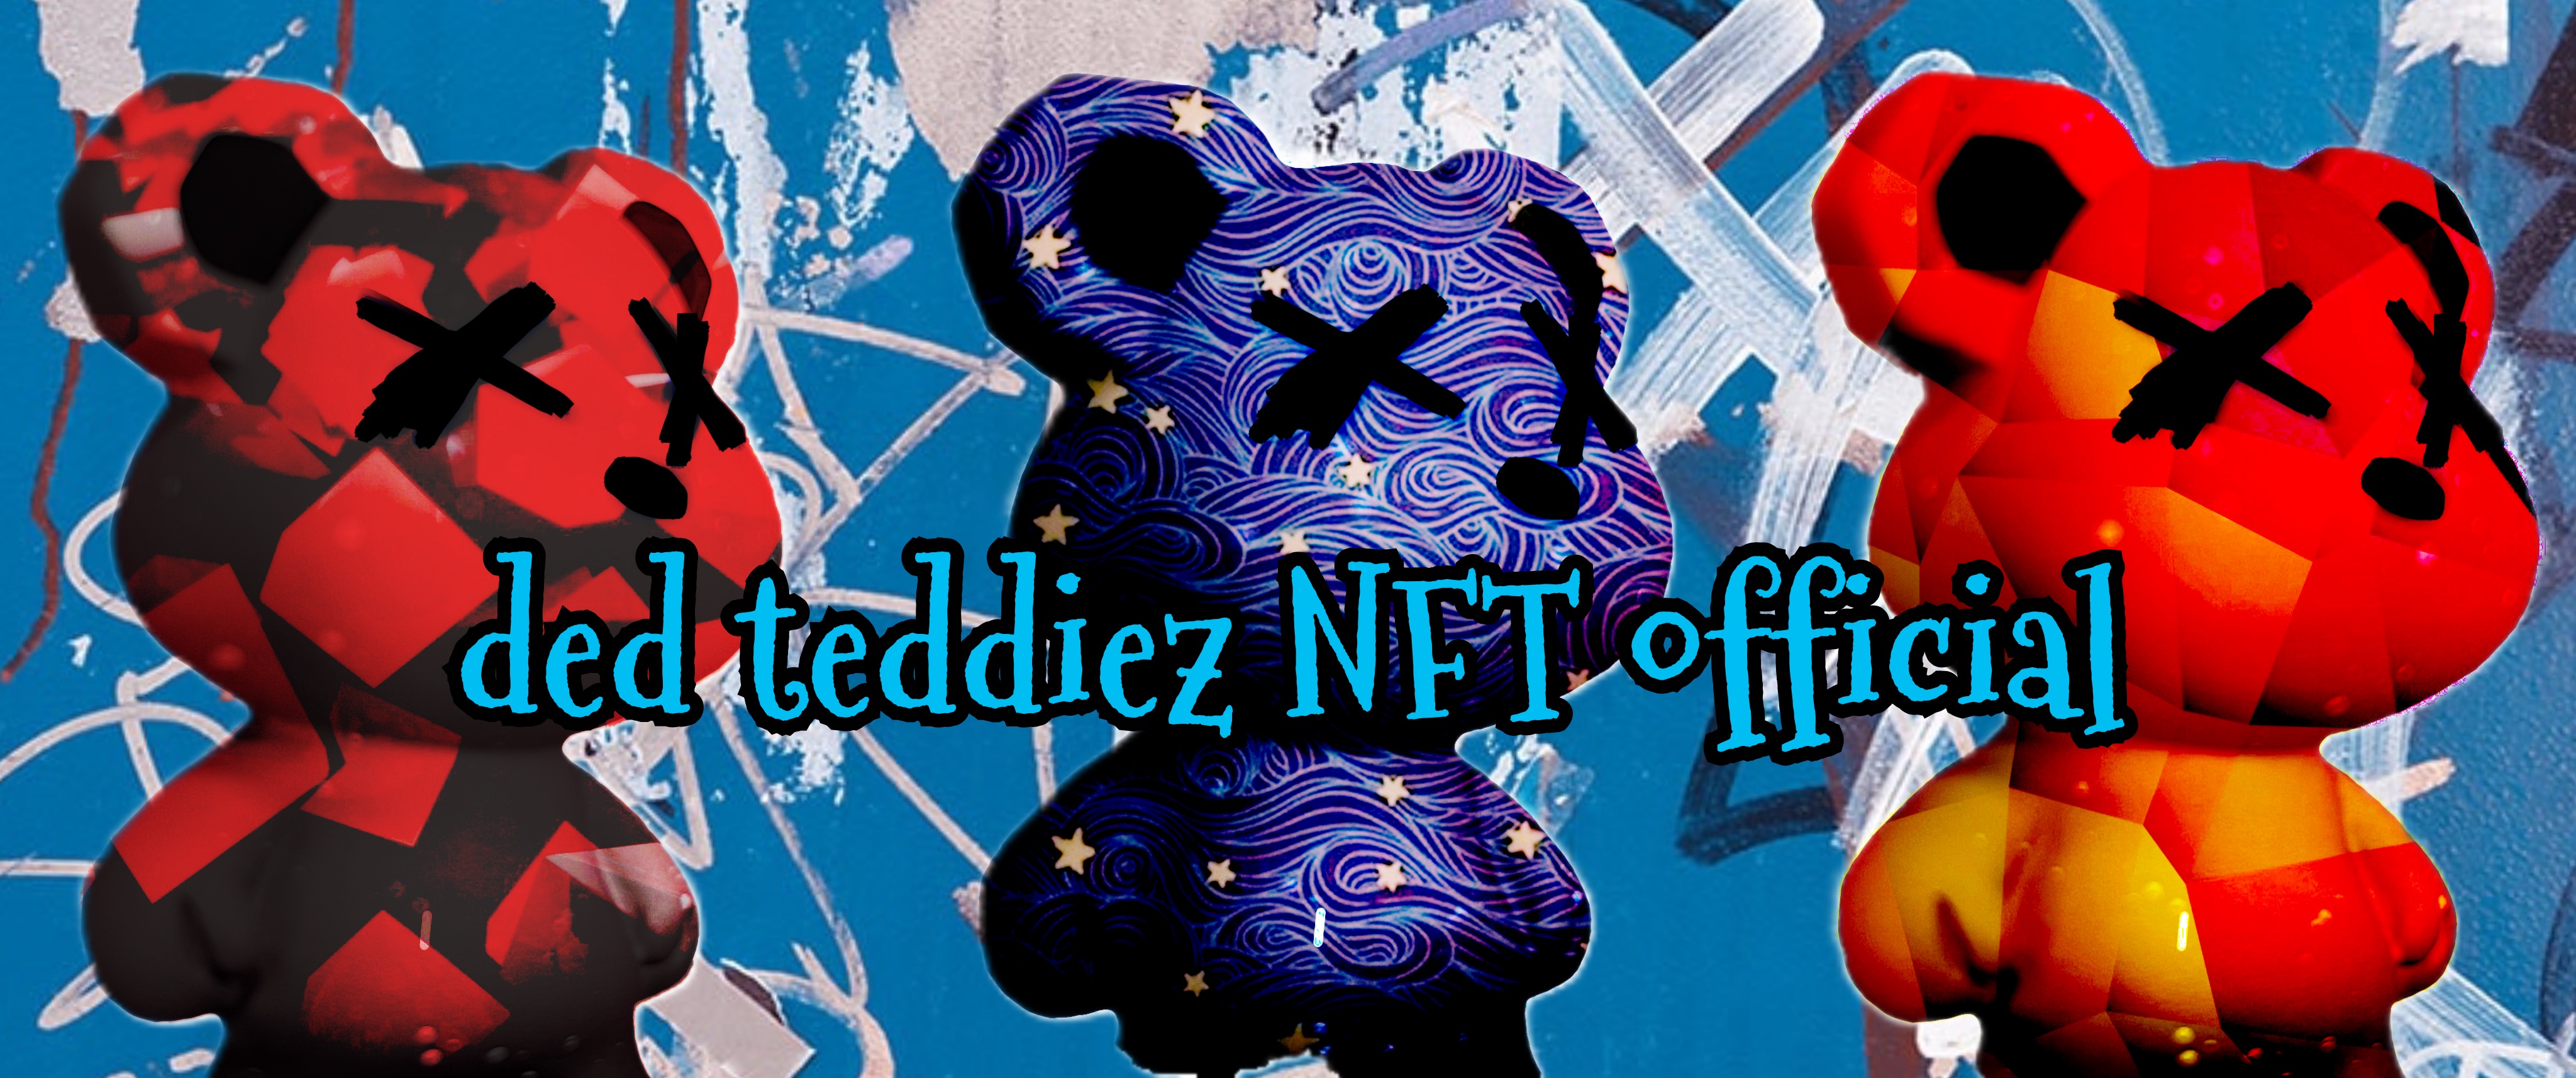 Ded_Teddiez_NFT_Official banner